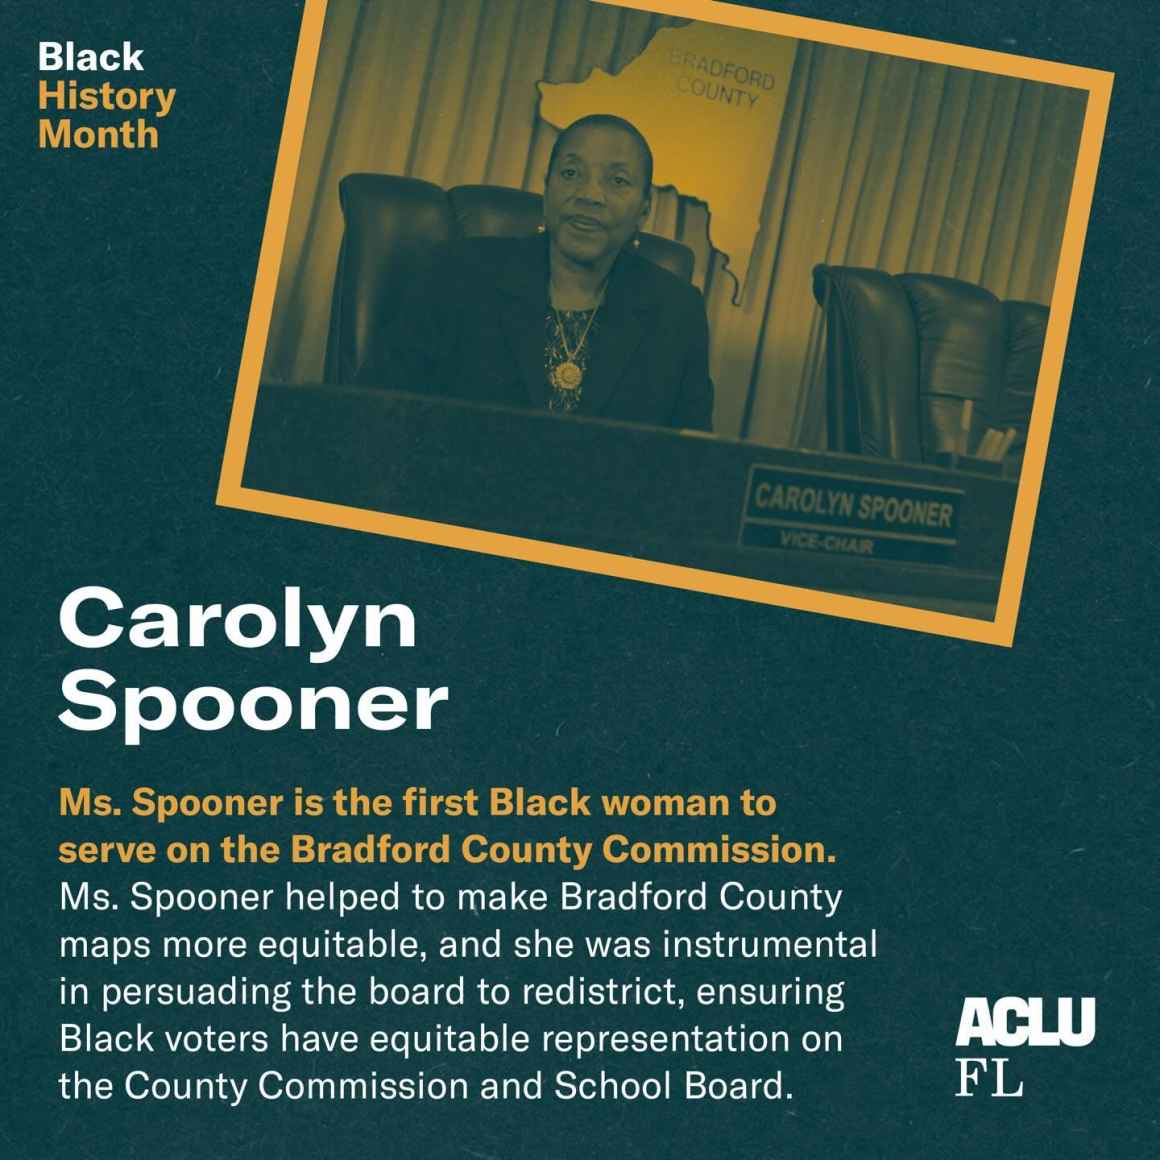 Carolyn Spooner